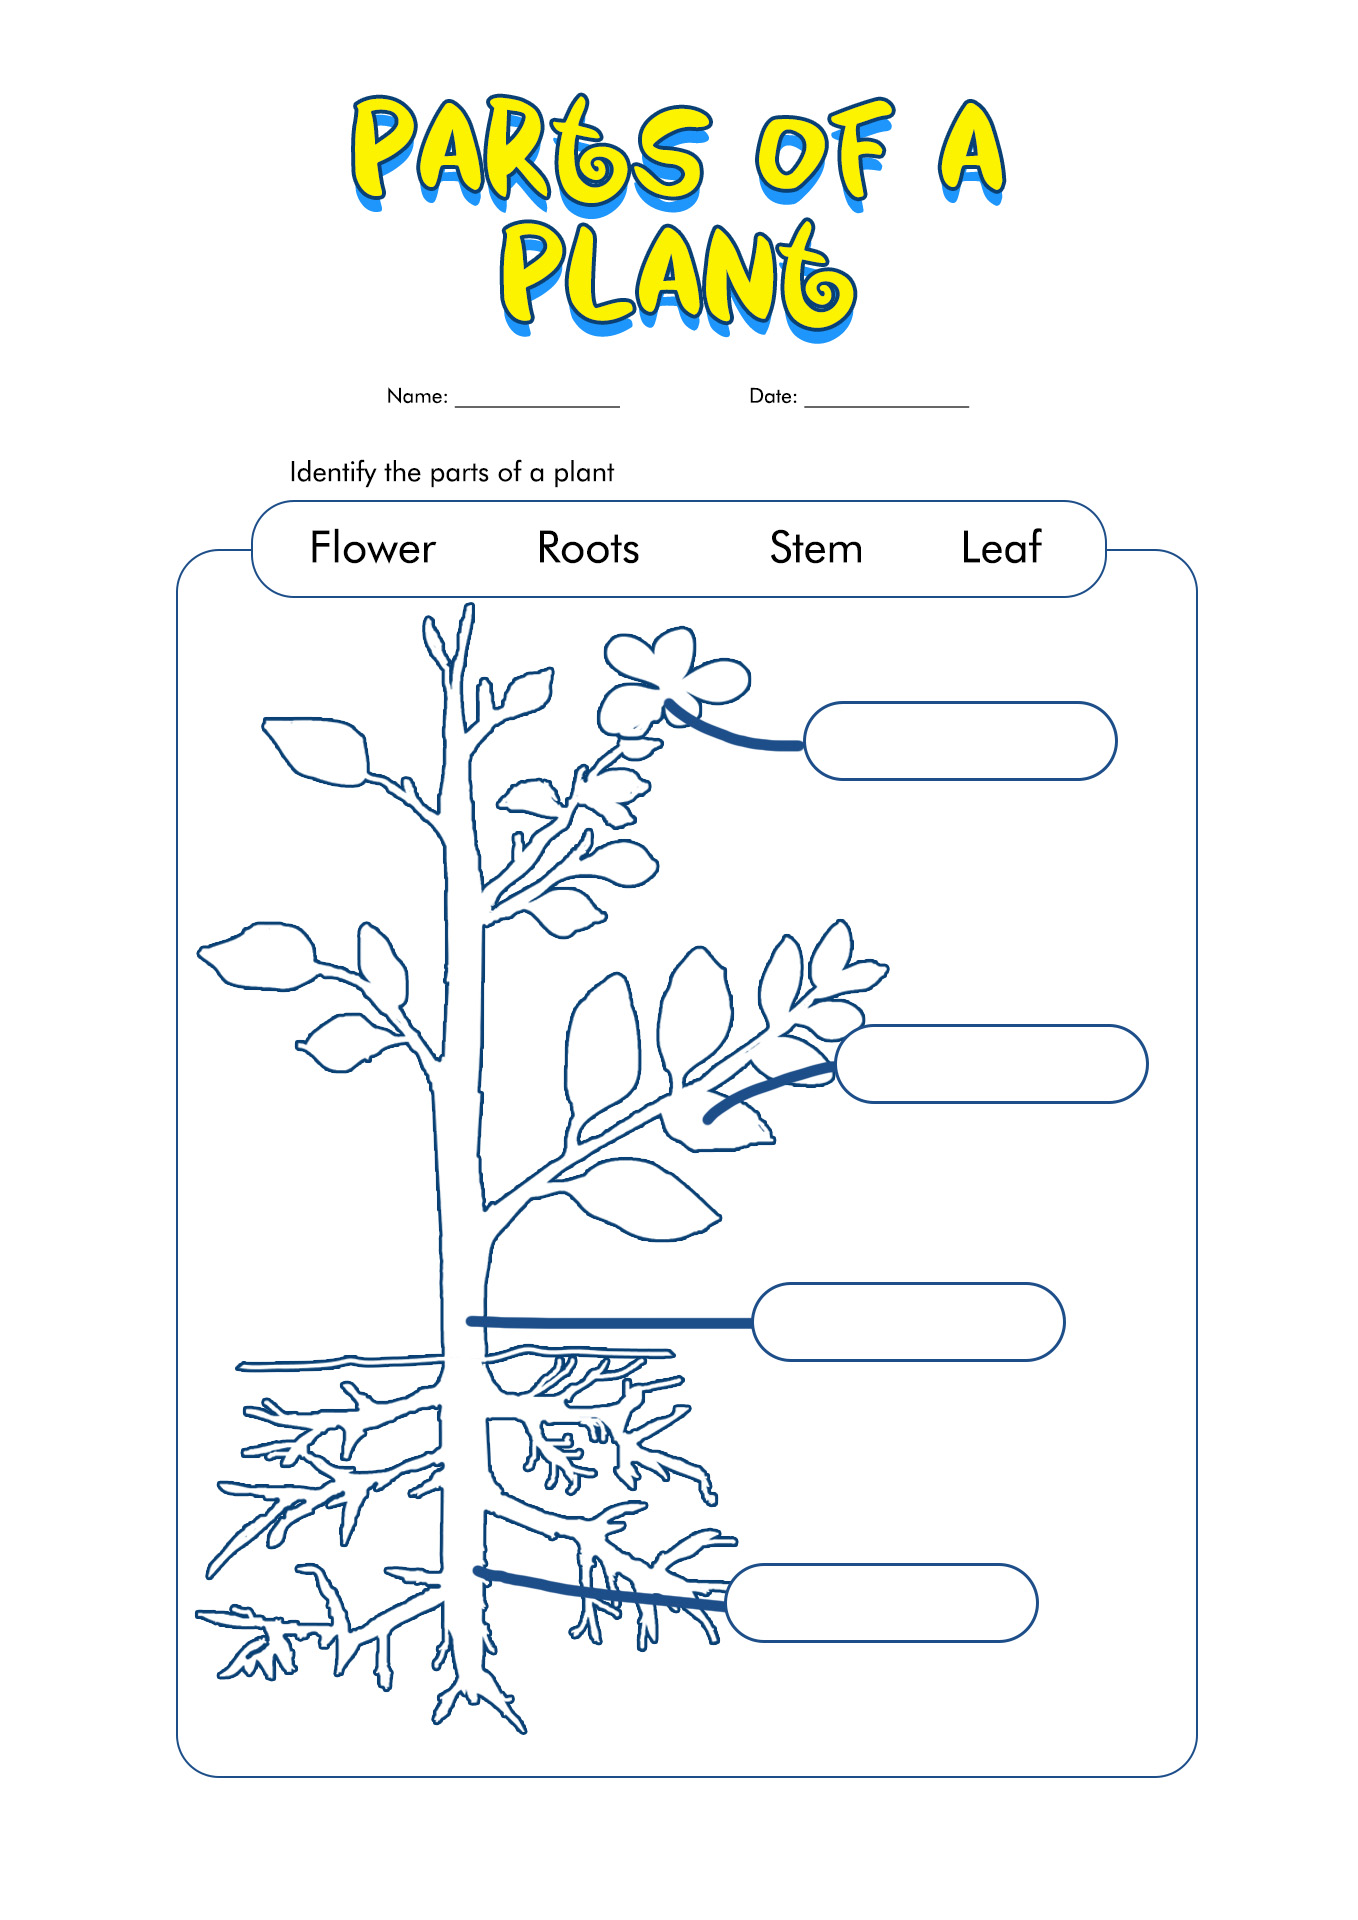  Plants Worksheet For Grade 1 Free Download Goodimg co